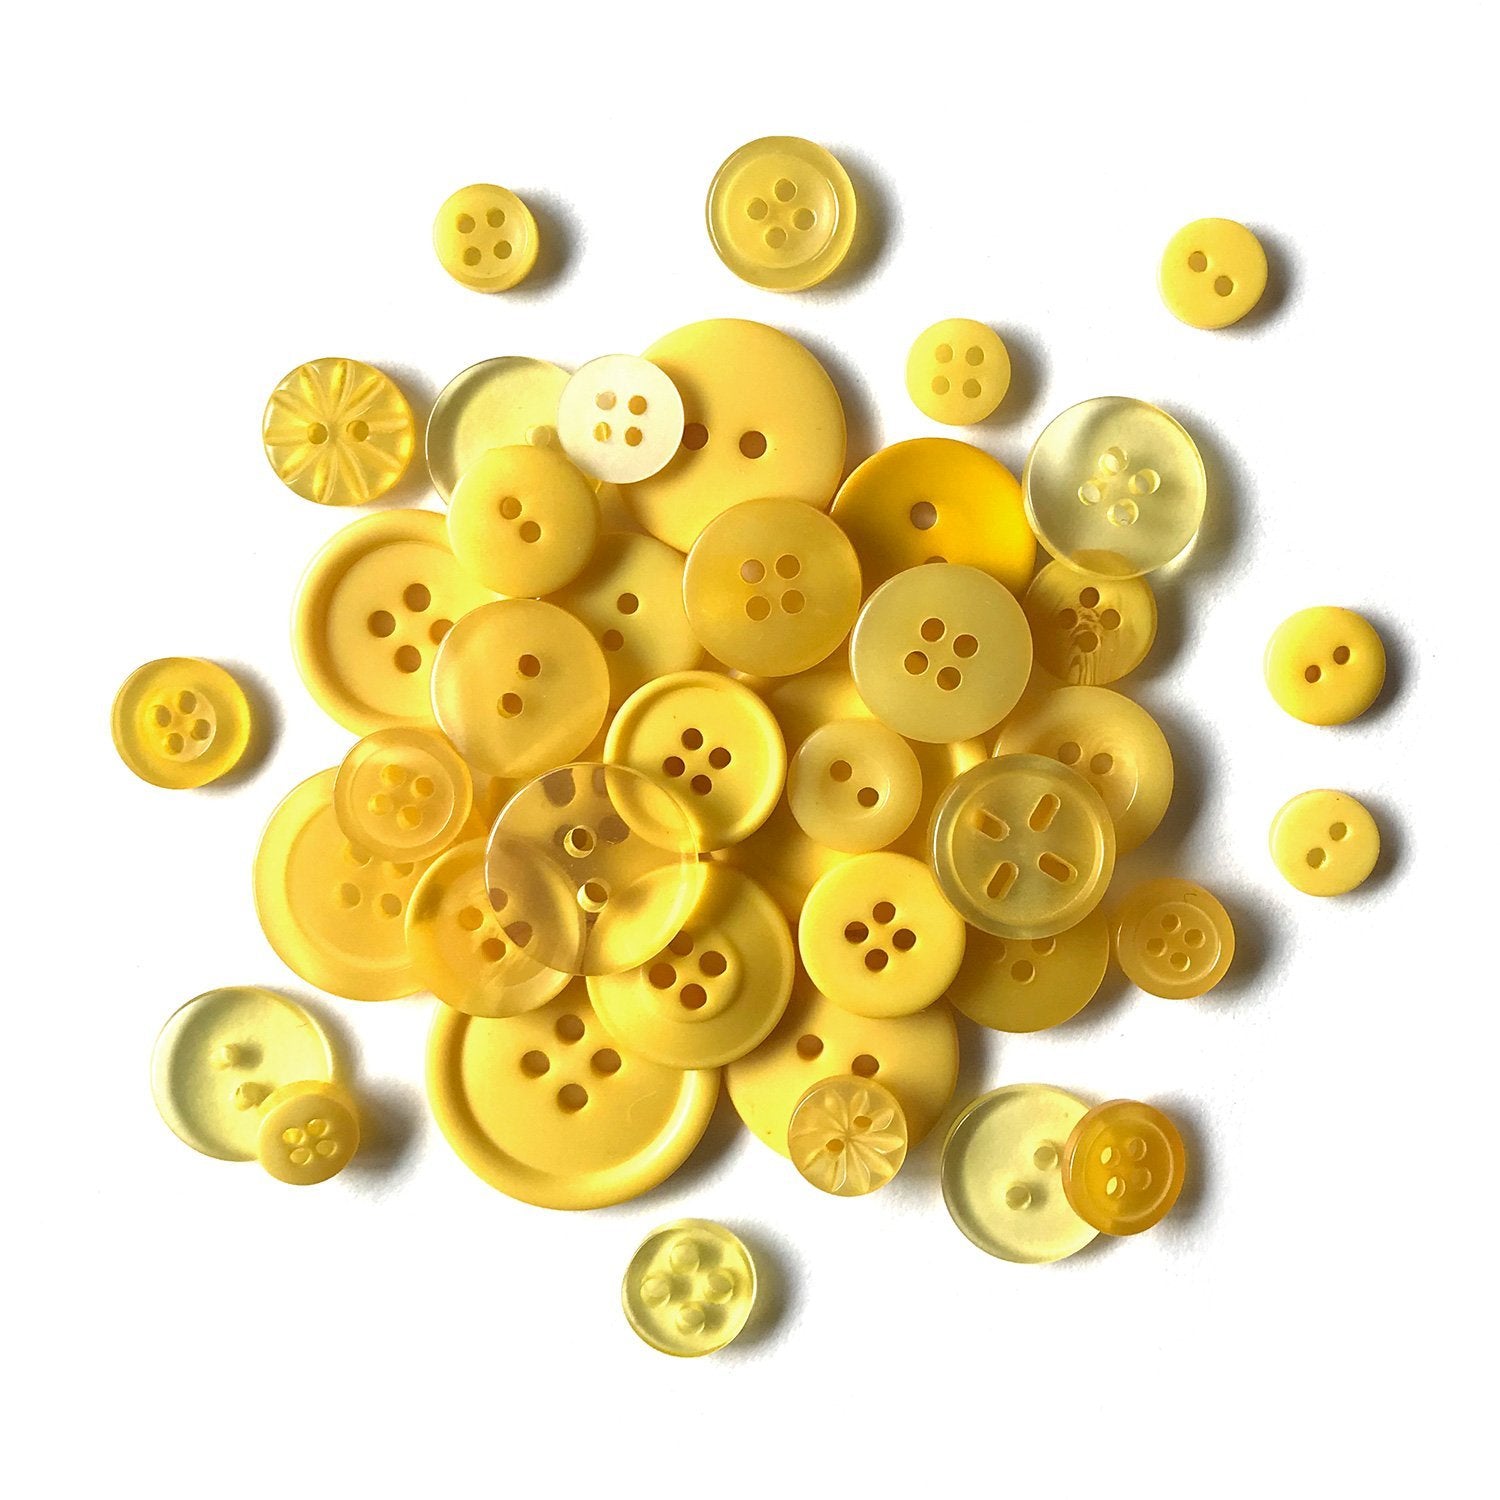 Dill Buttons 211456 Yellow Heart button 15mm - HeartStrings Yarn Studio